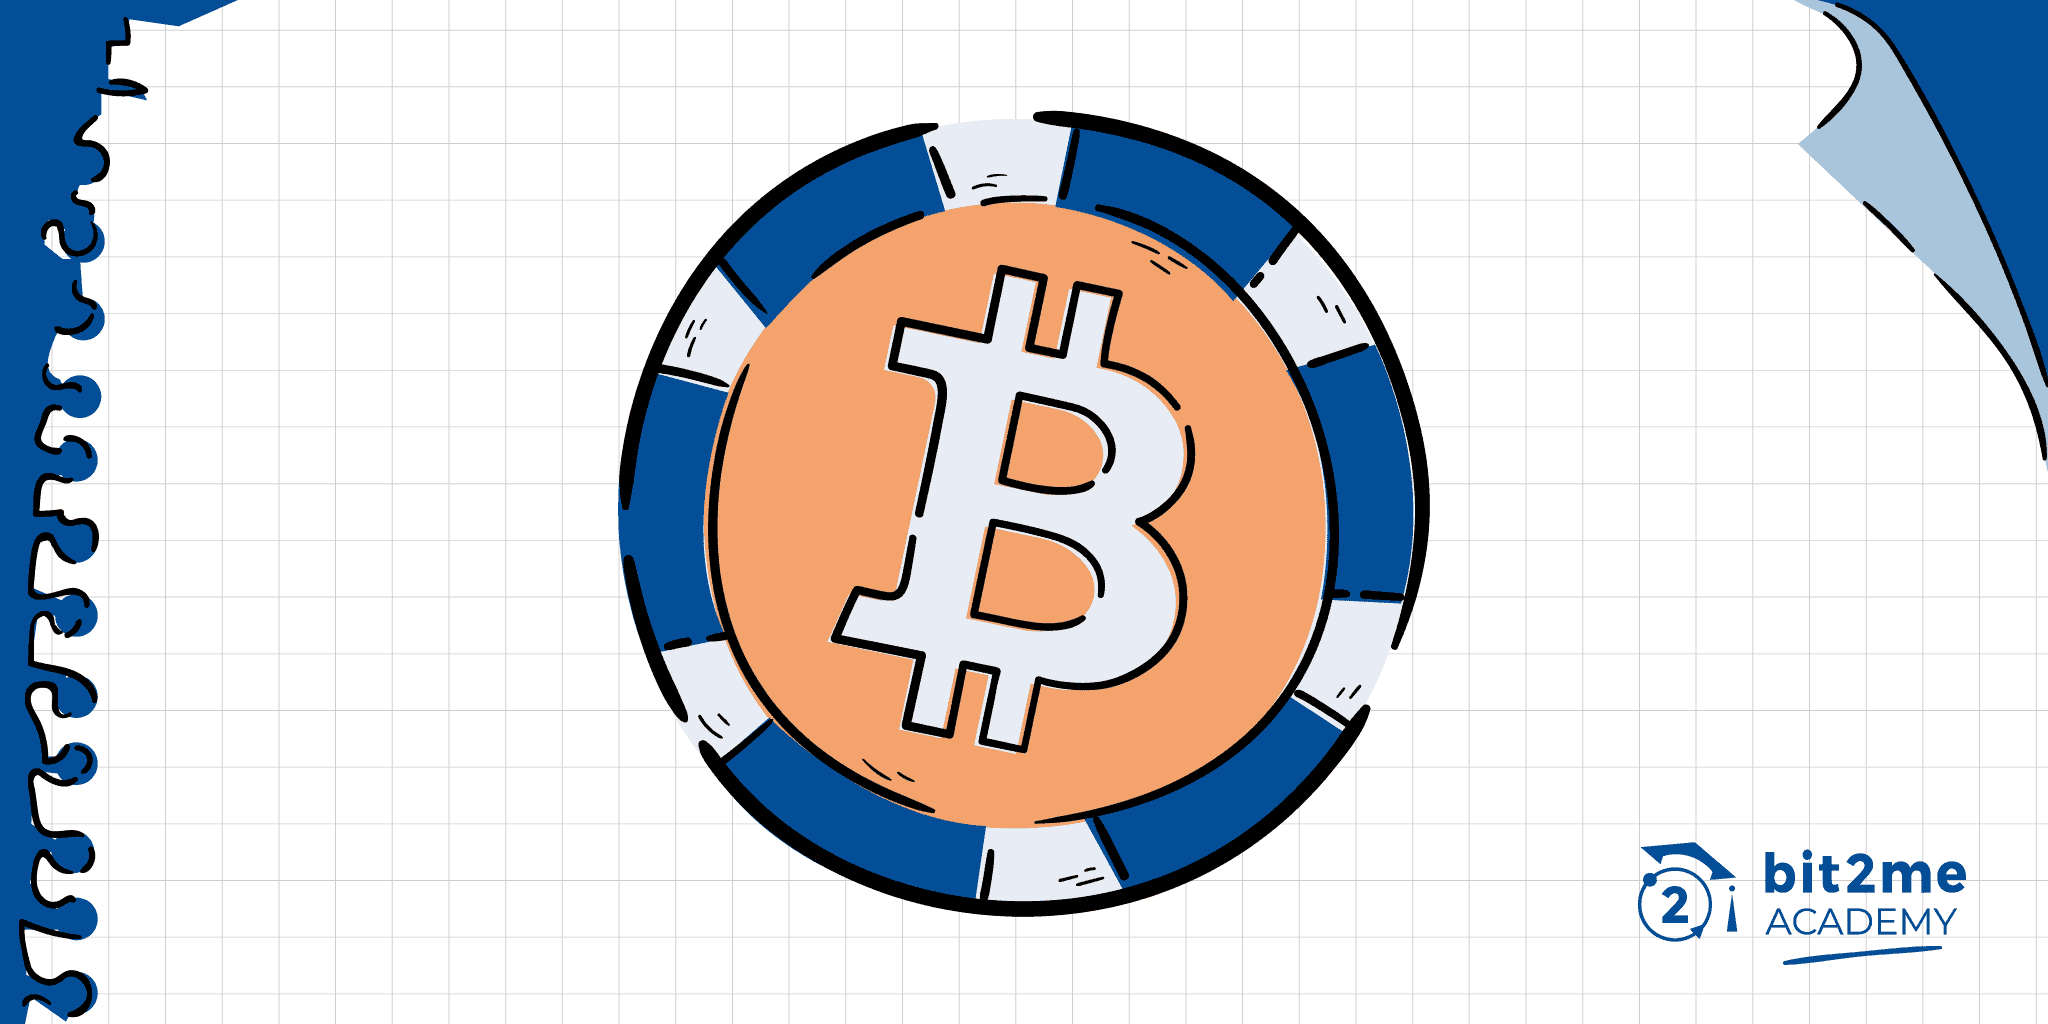 Colored coins ethereum bitcoin fog reddit